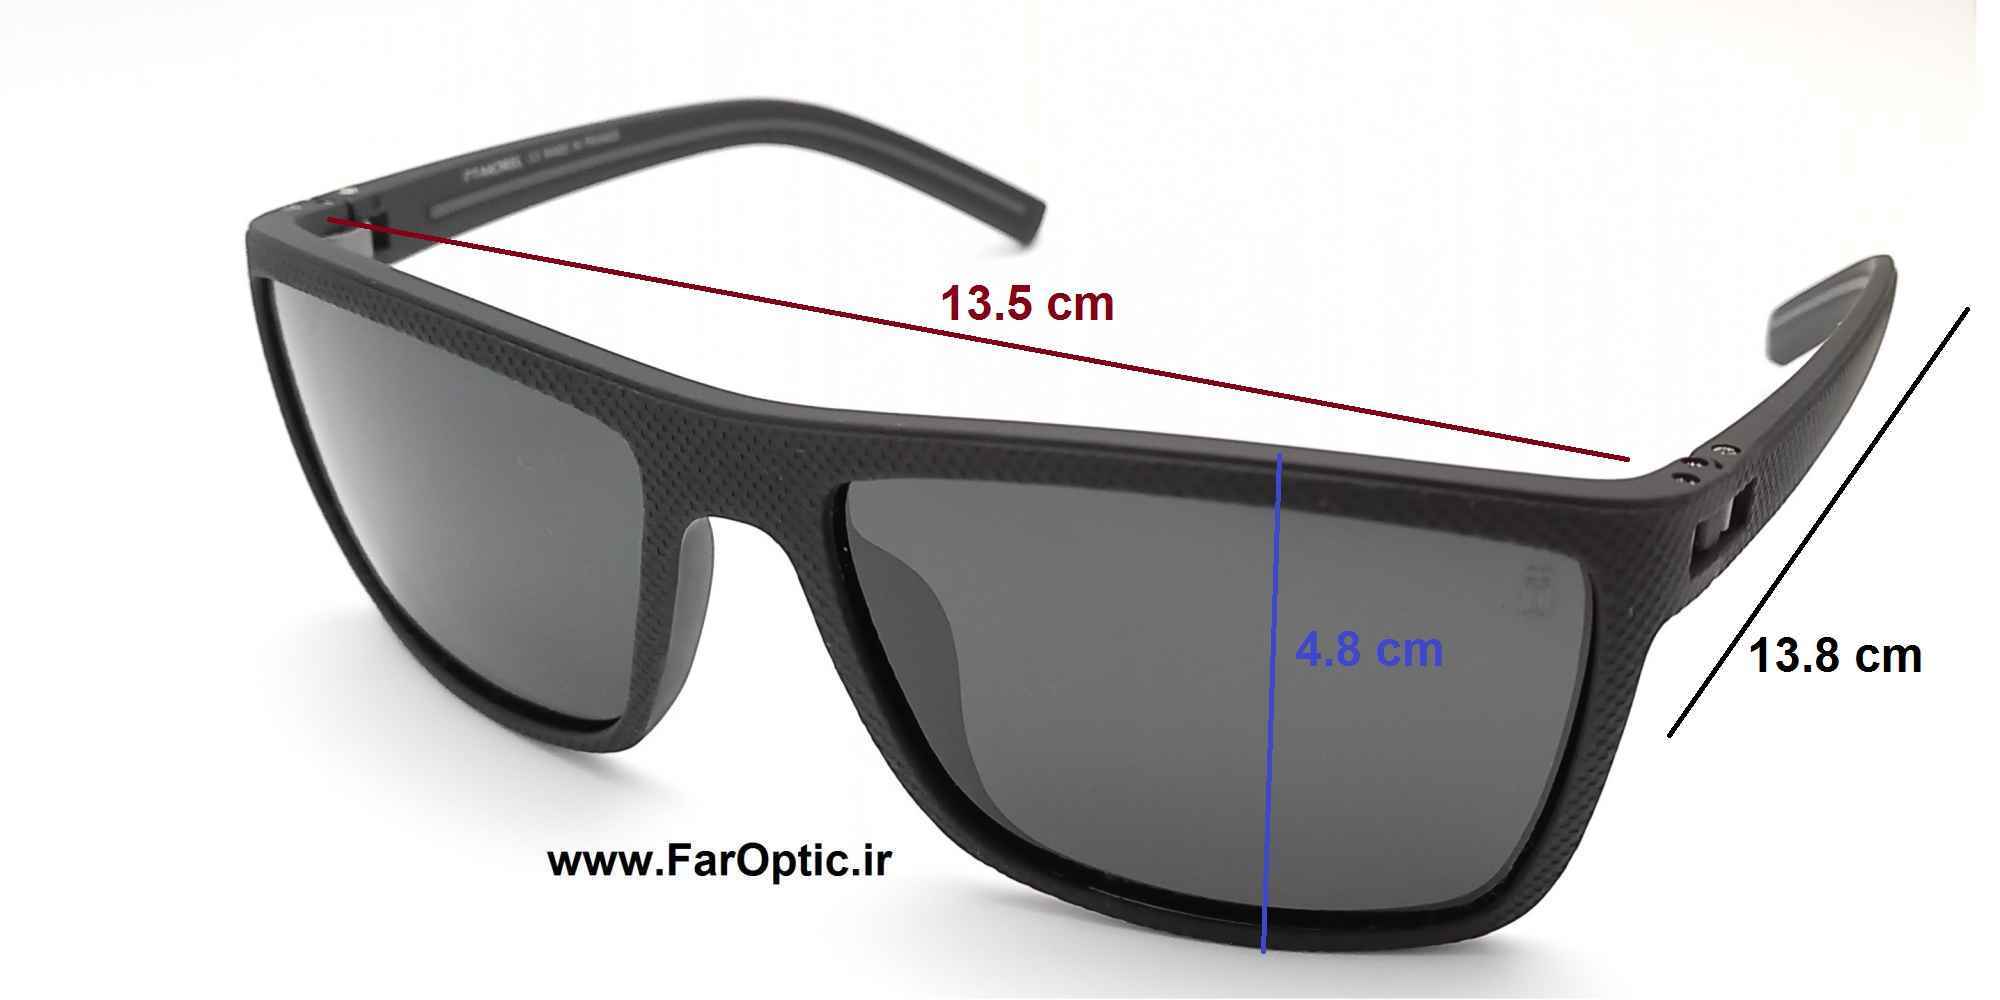 مشخصات اندازه عینک افتابی ضد آفتاب پلاریزه